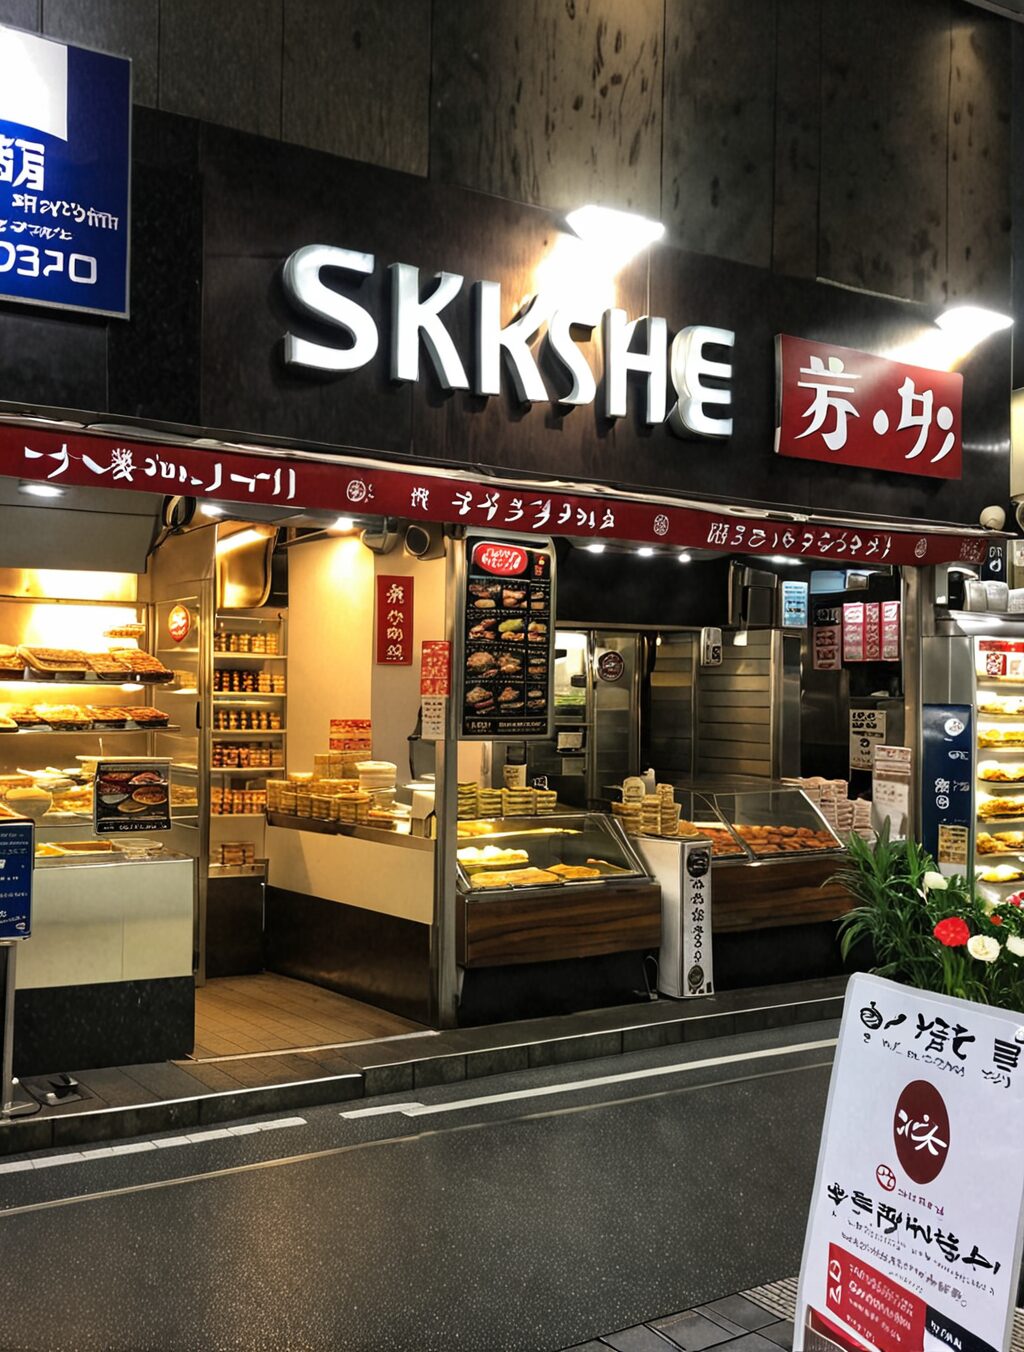 kosher food in japan